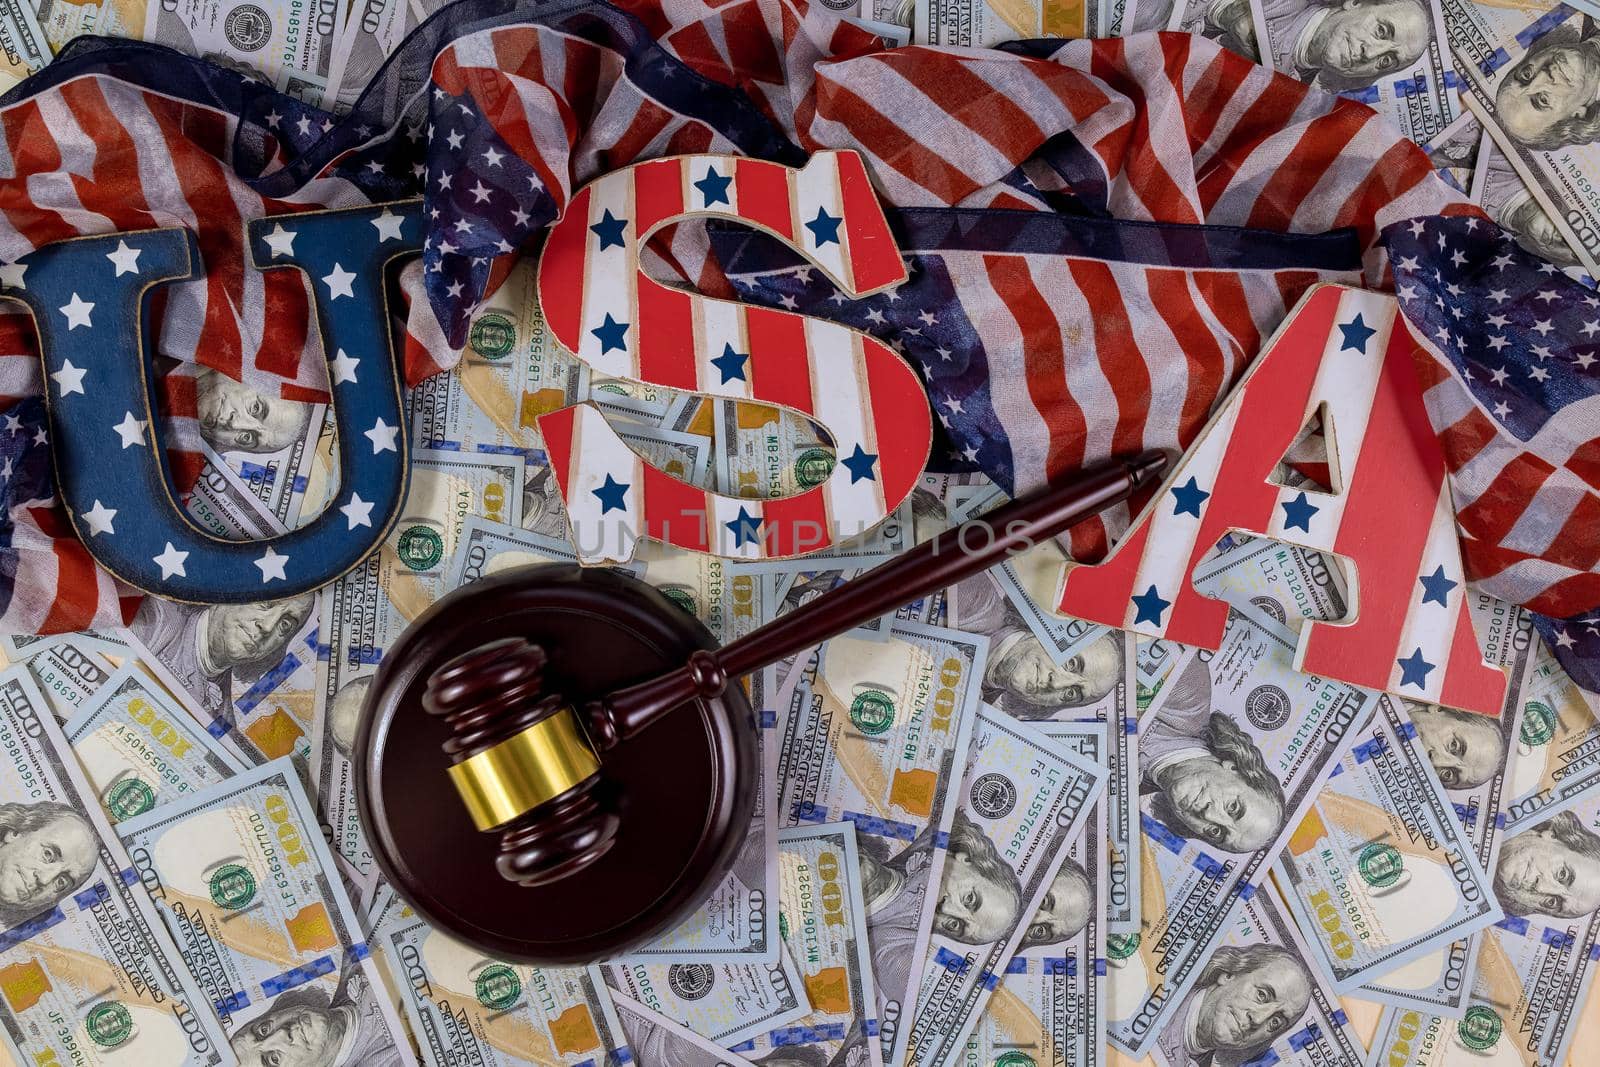 US financial regulation of arrest of property economic US sanctions with USA flag US dollars banknotes Judge gavel